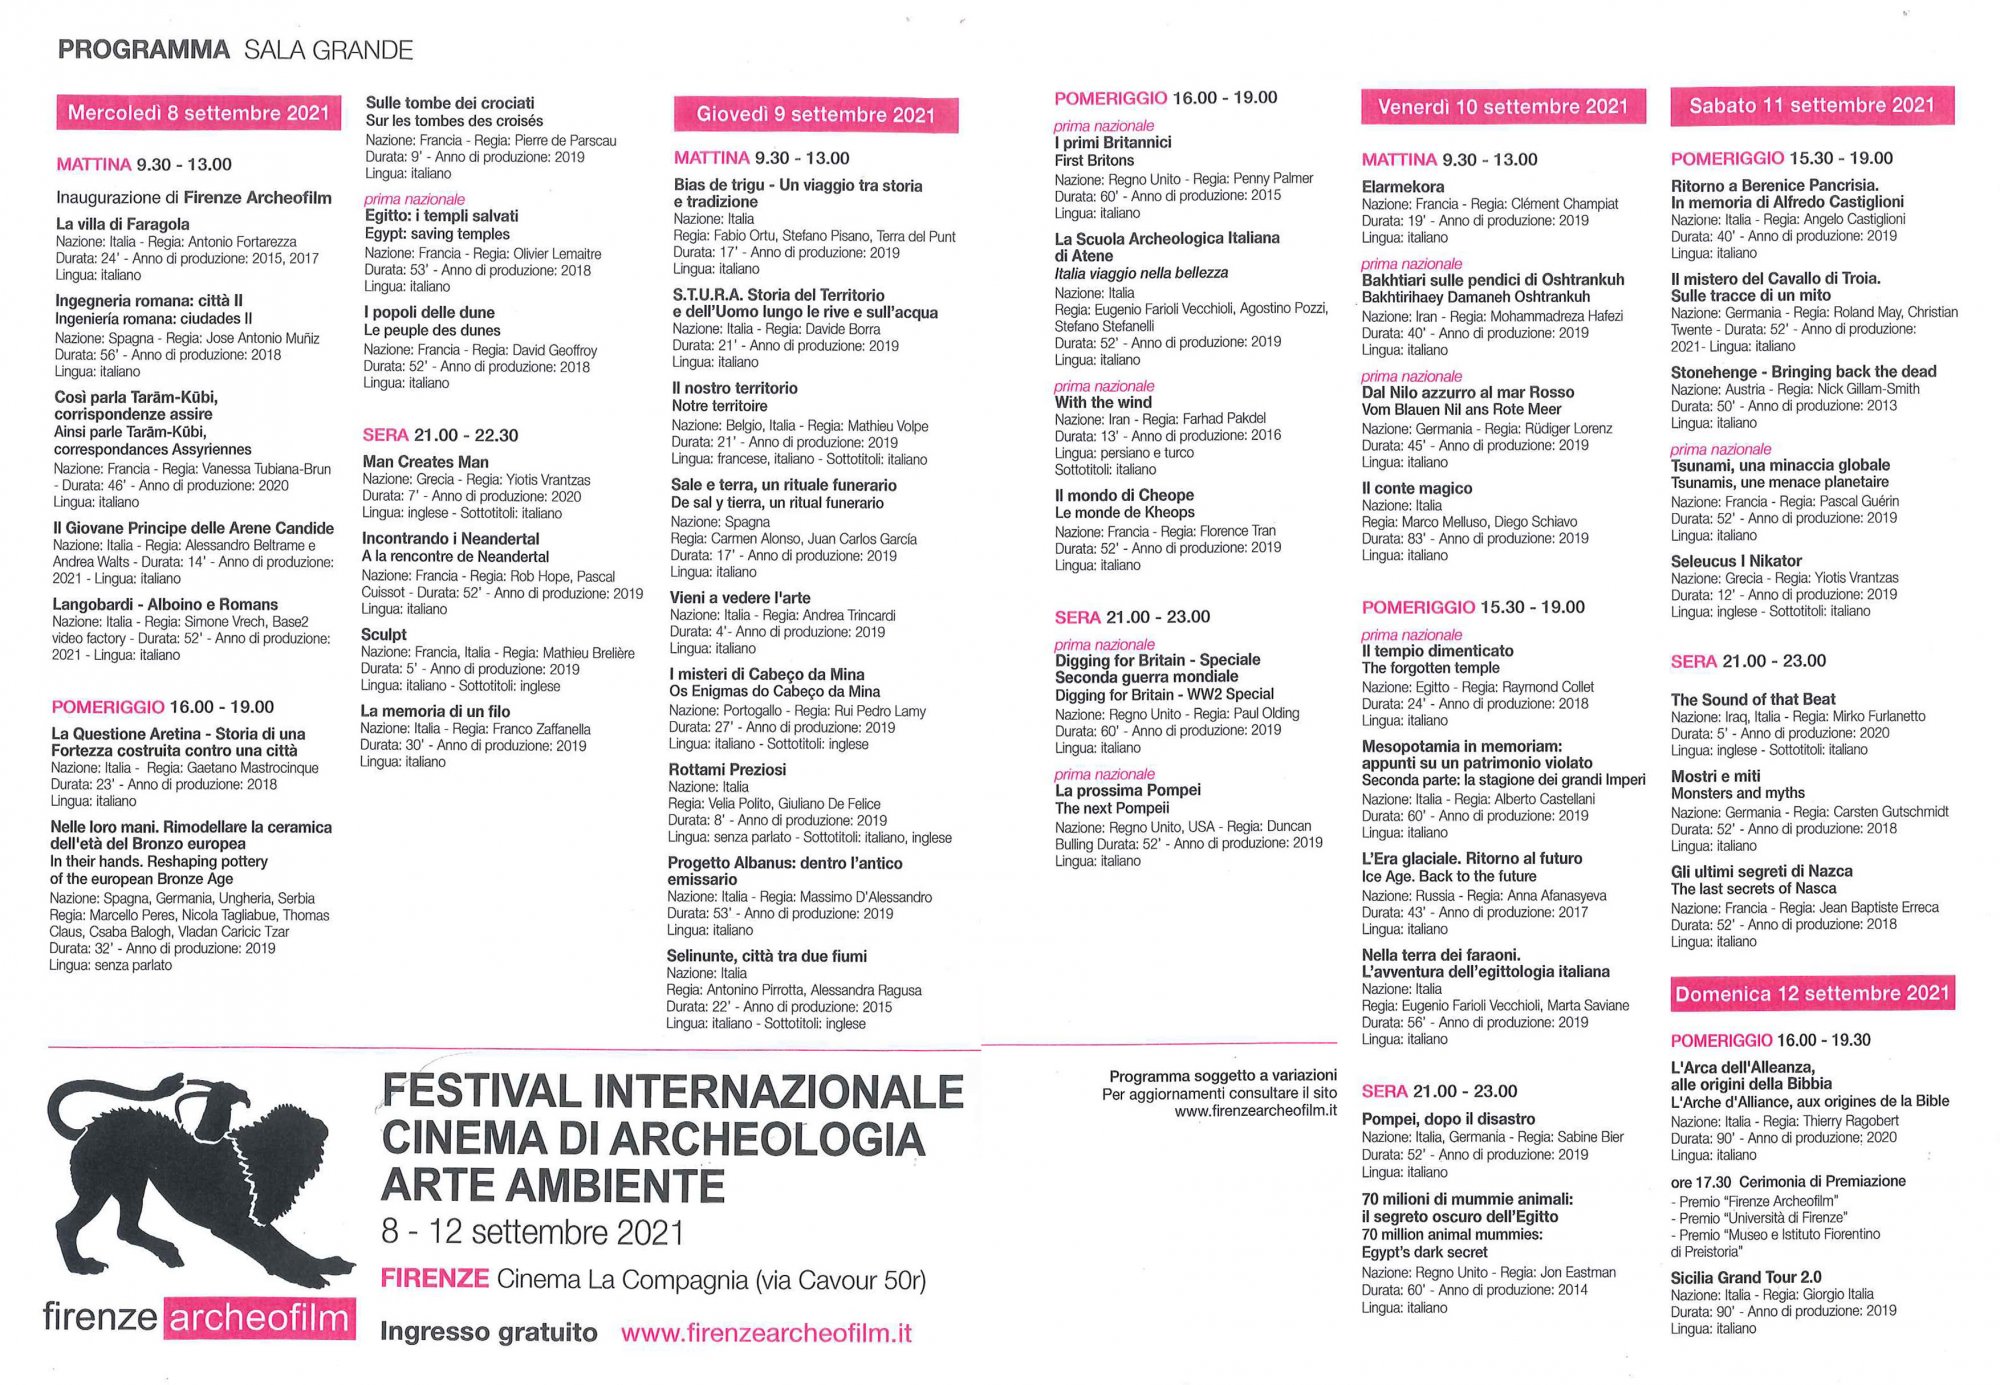 Firenze Archeofilm Festival